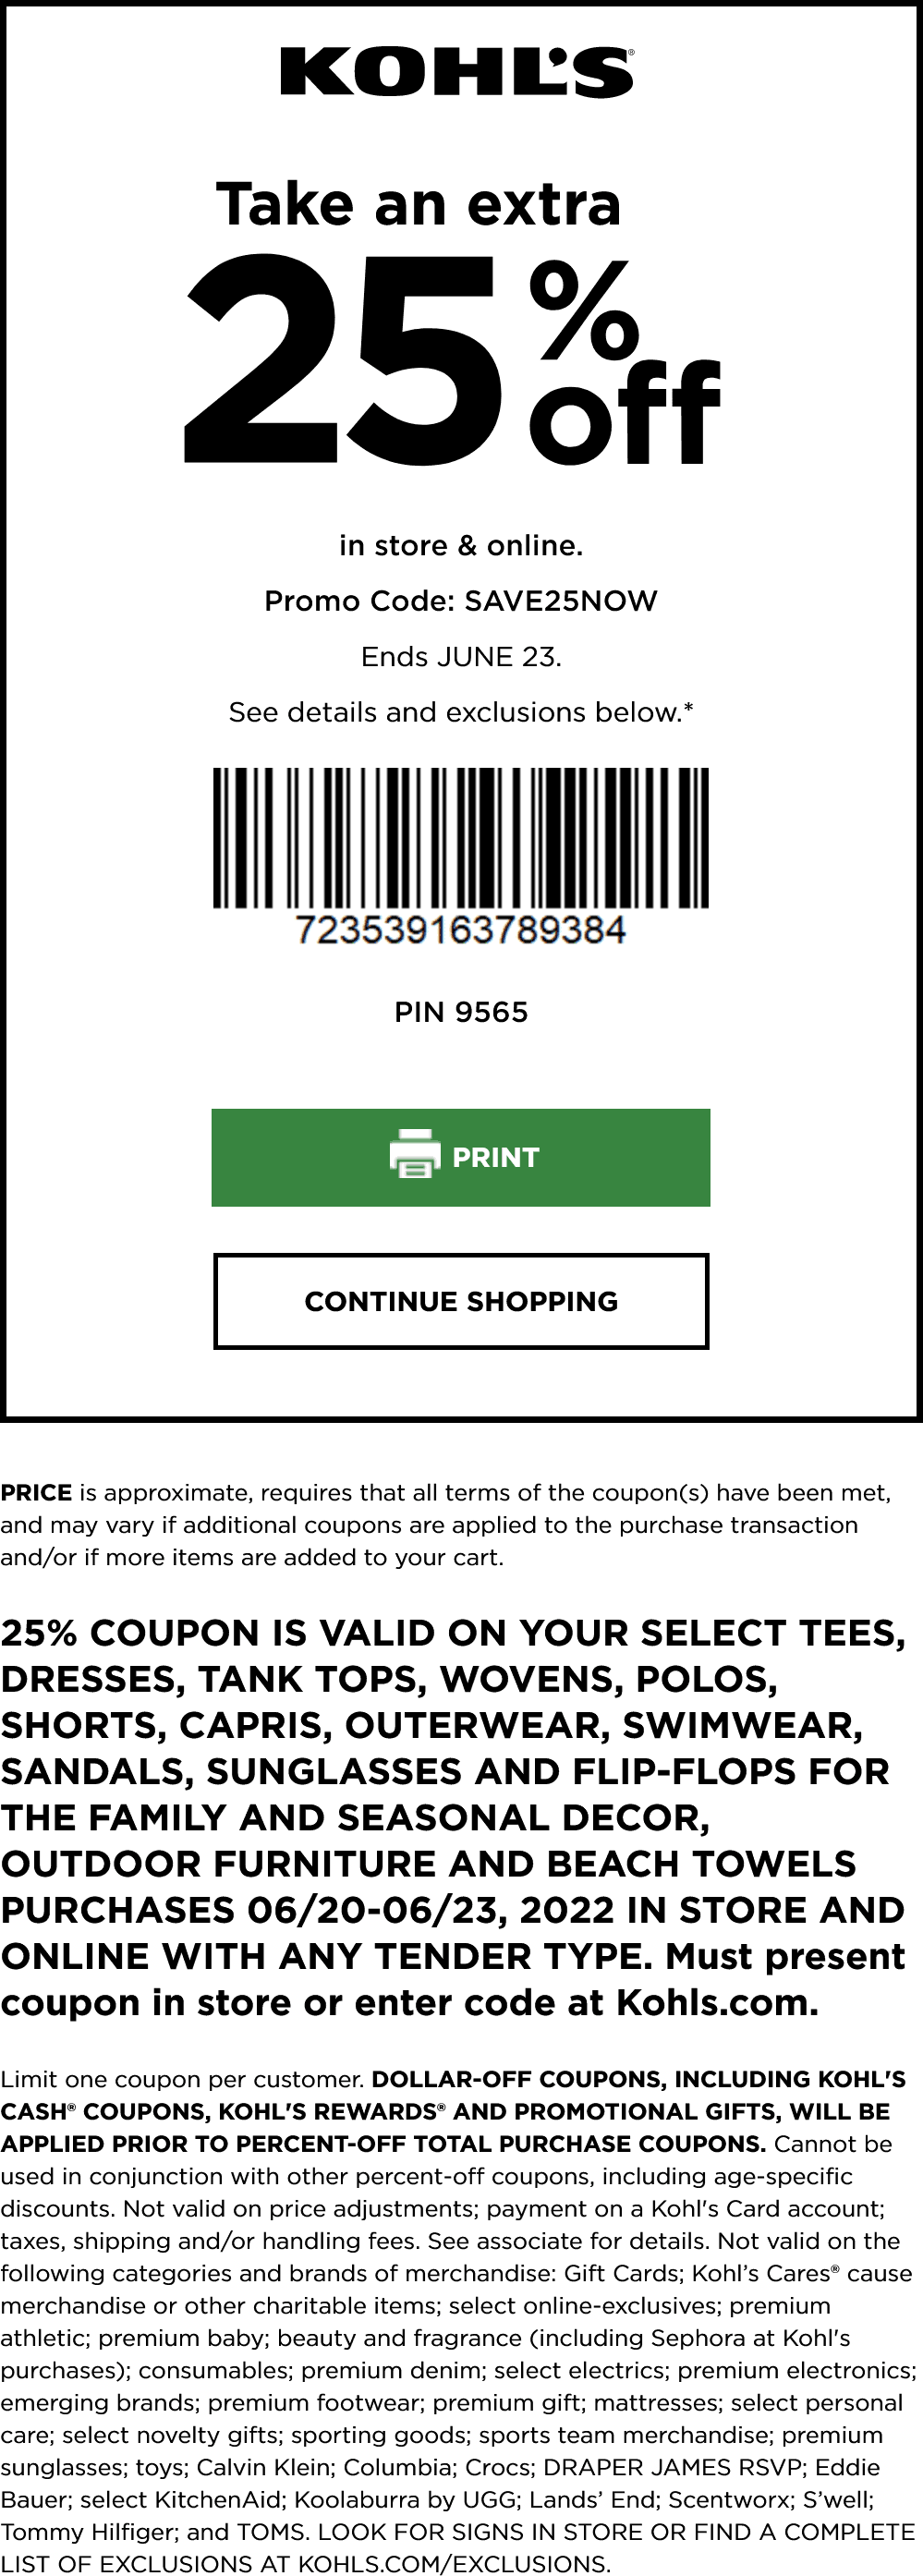 Kohls coupons & promo code for [June 2022]